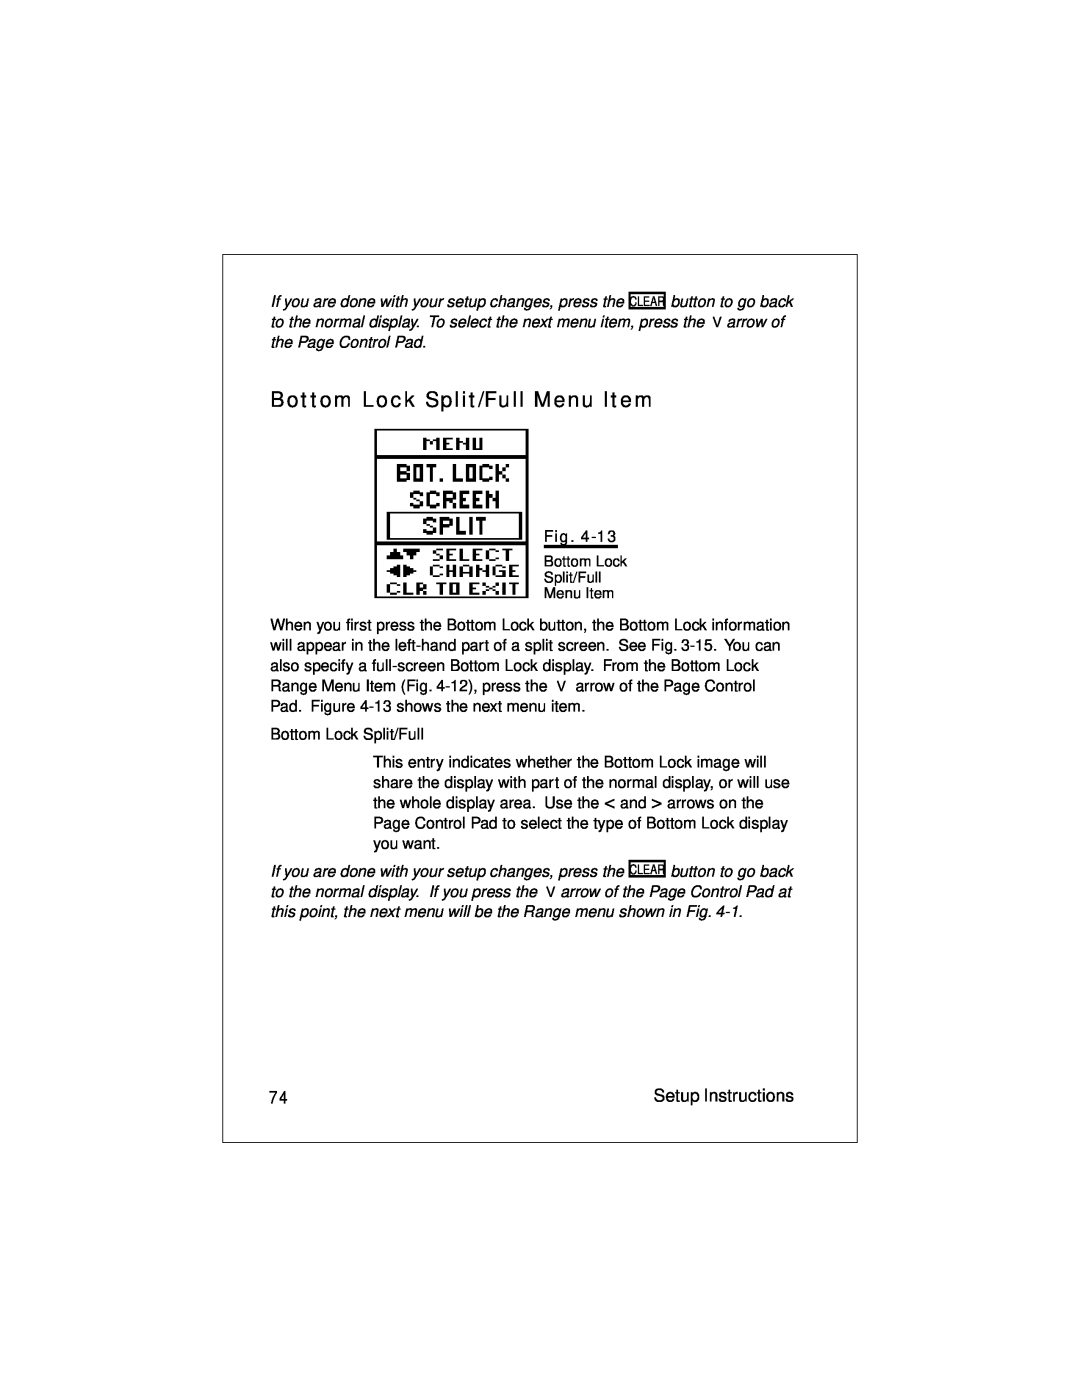 Raymarine L470 instruction manual Bottom Lock Split/Full Menu Item, Setup Instructions 